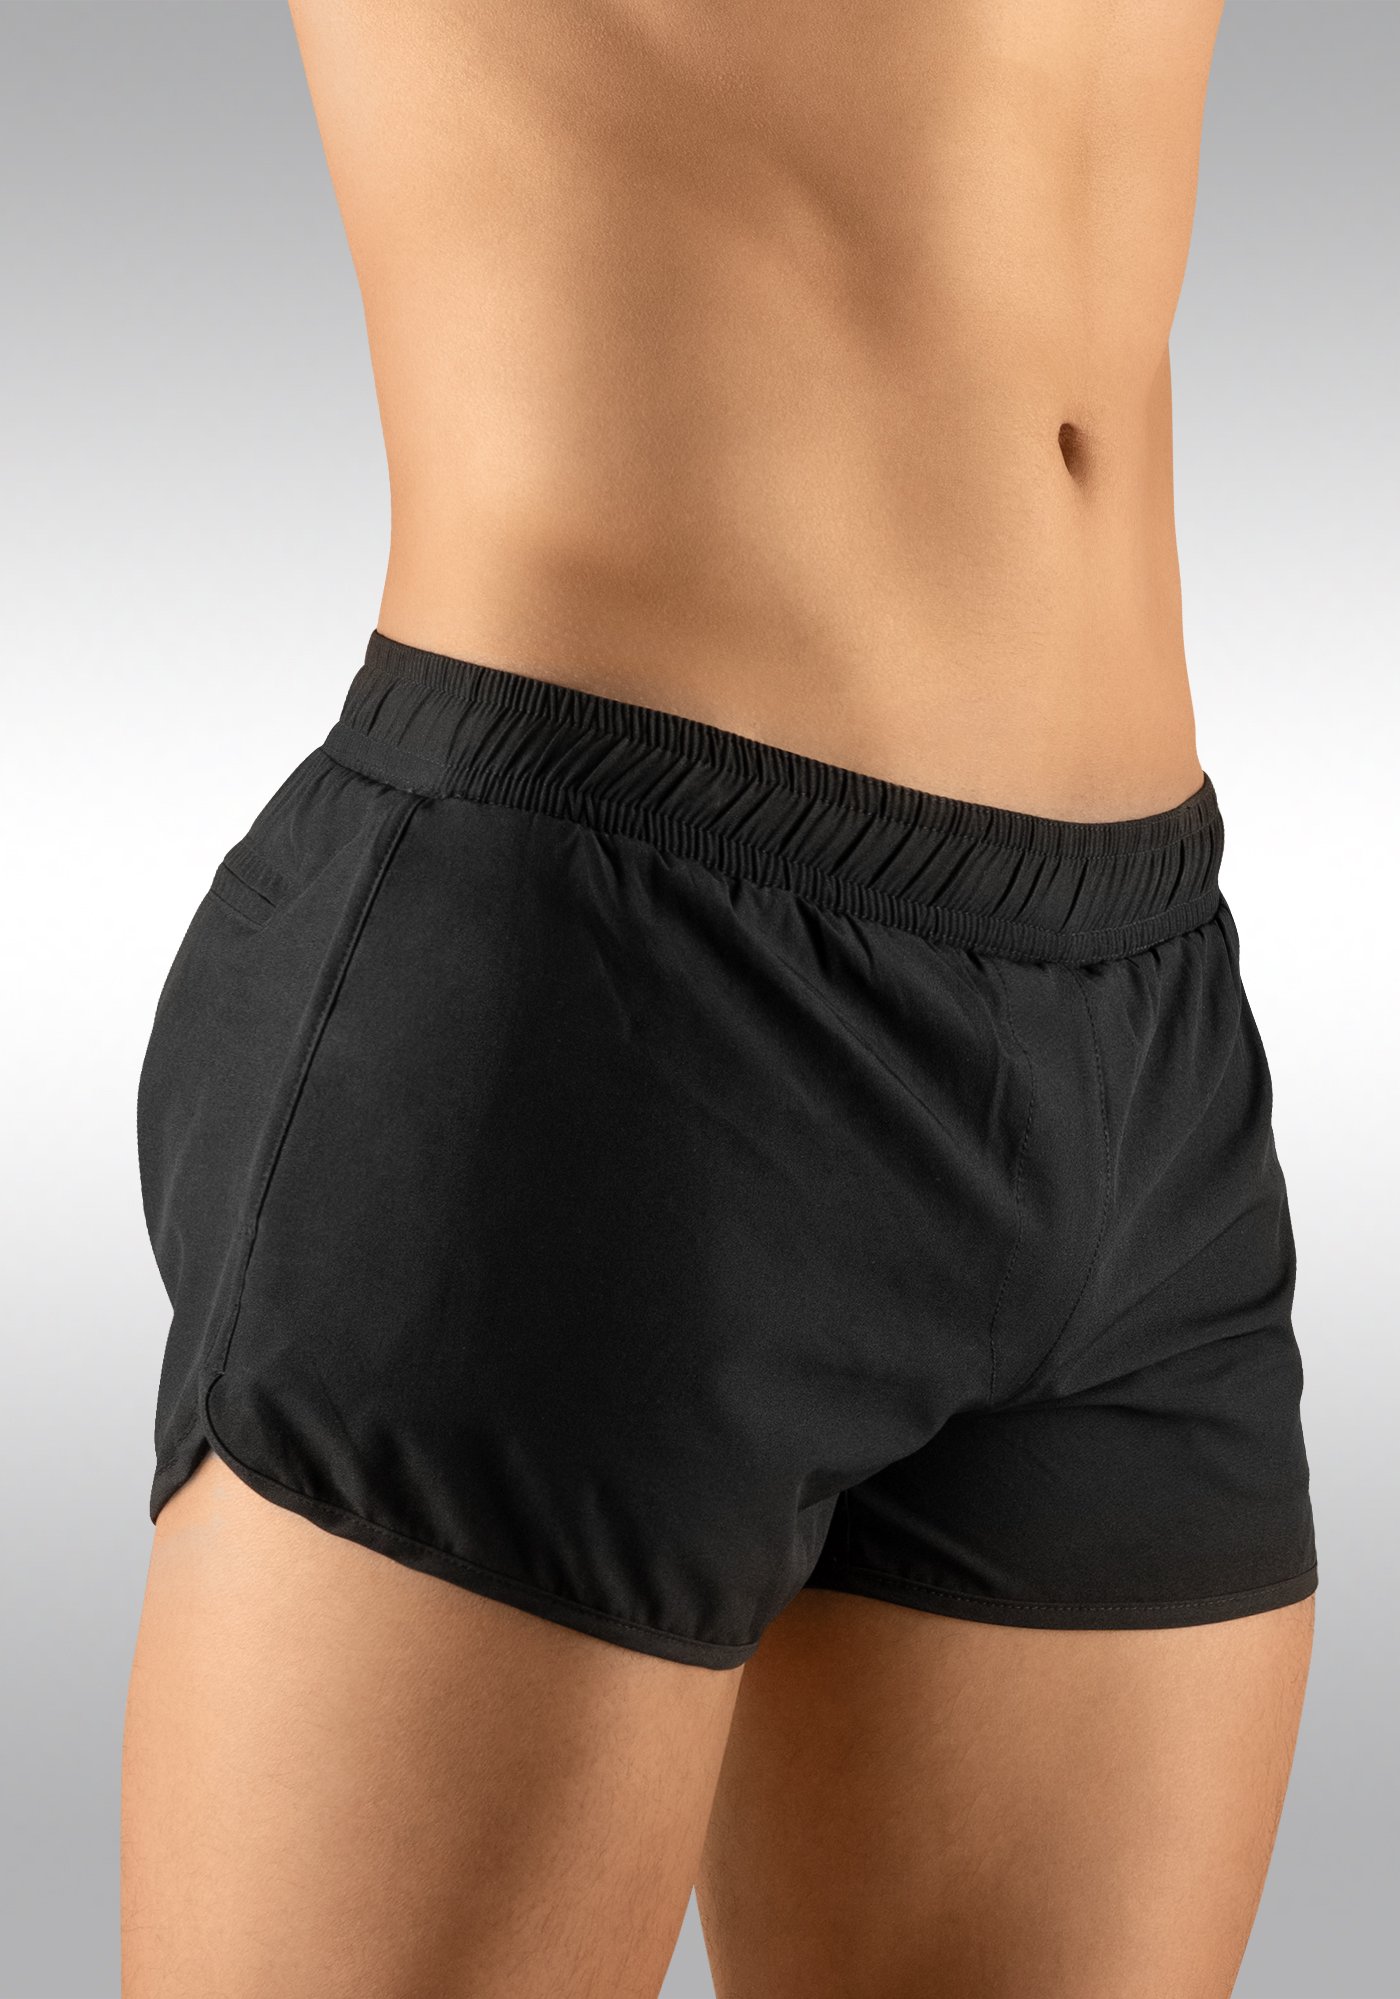 Men's Gym Shorts With Built In - Ergowear